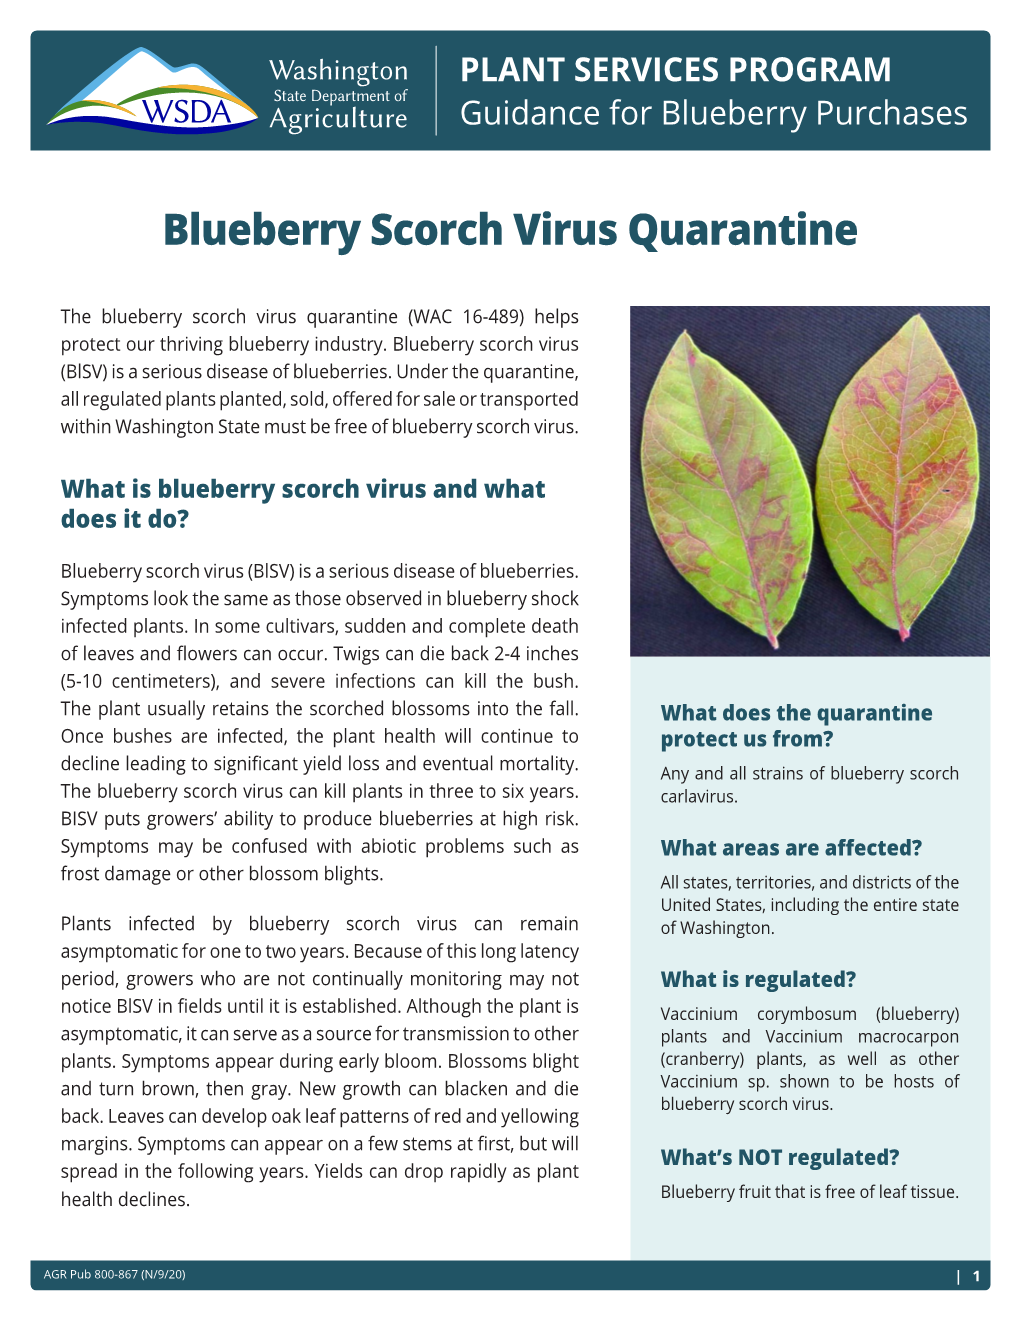 Blueberry Scorch Virus Quarantine